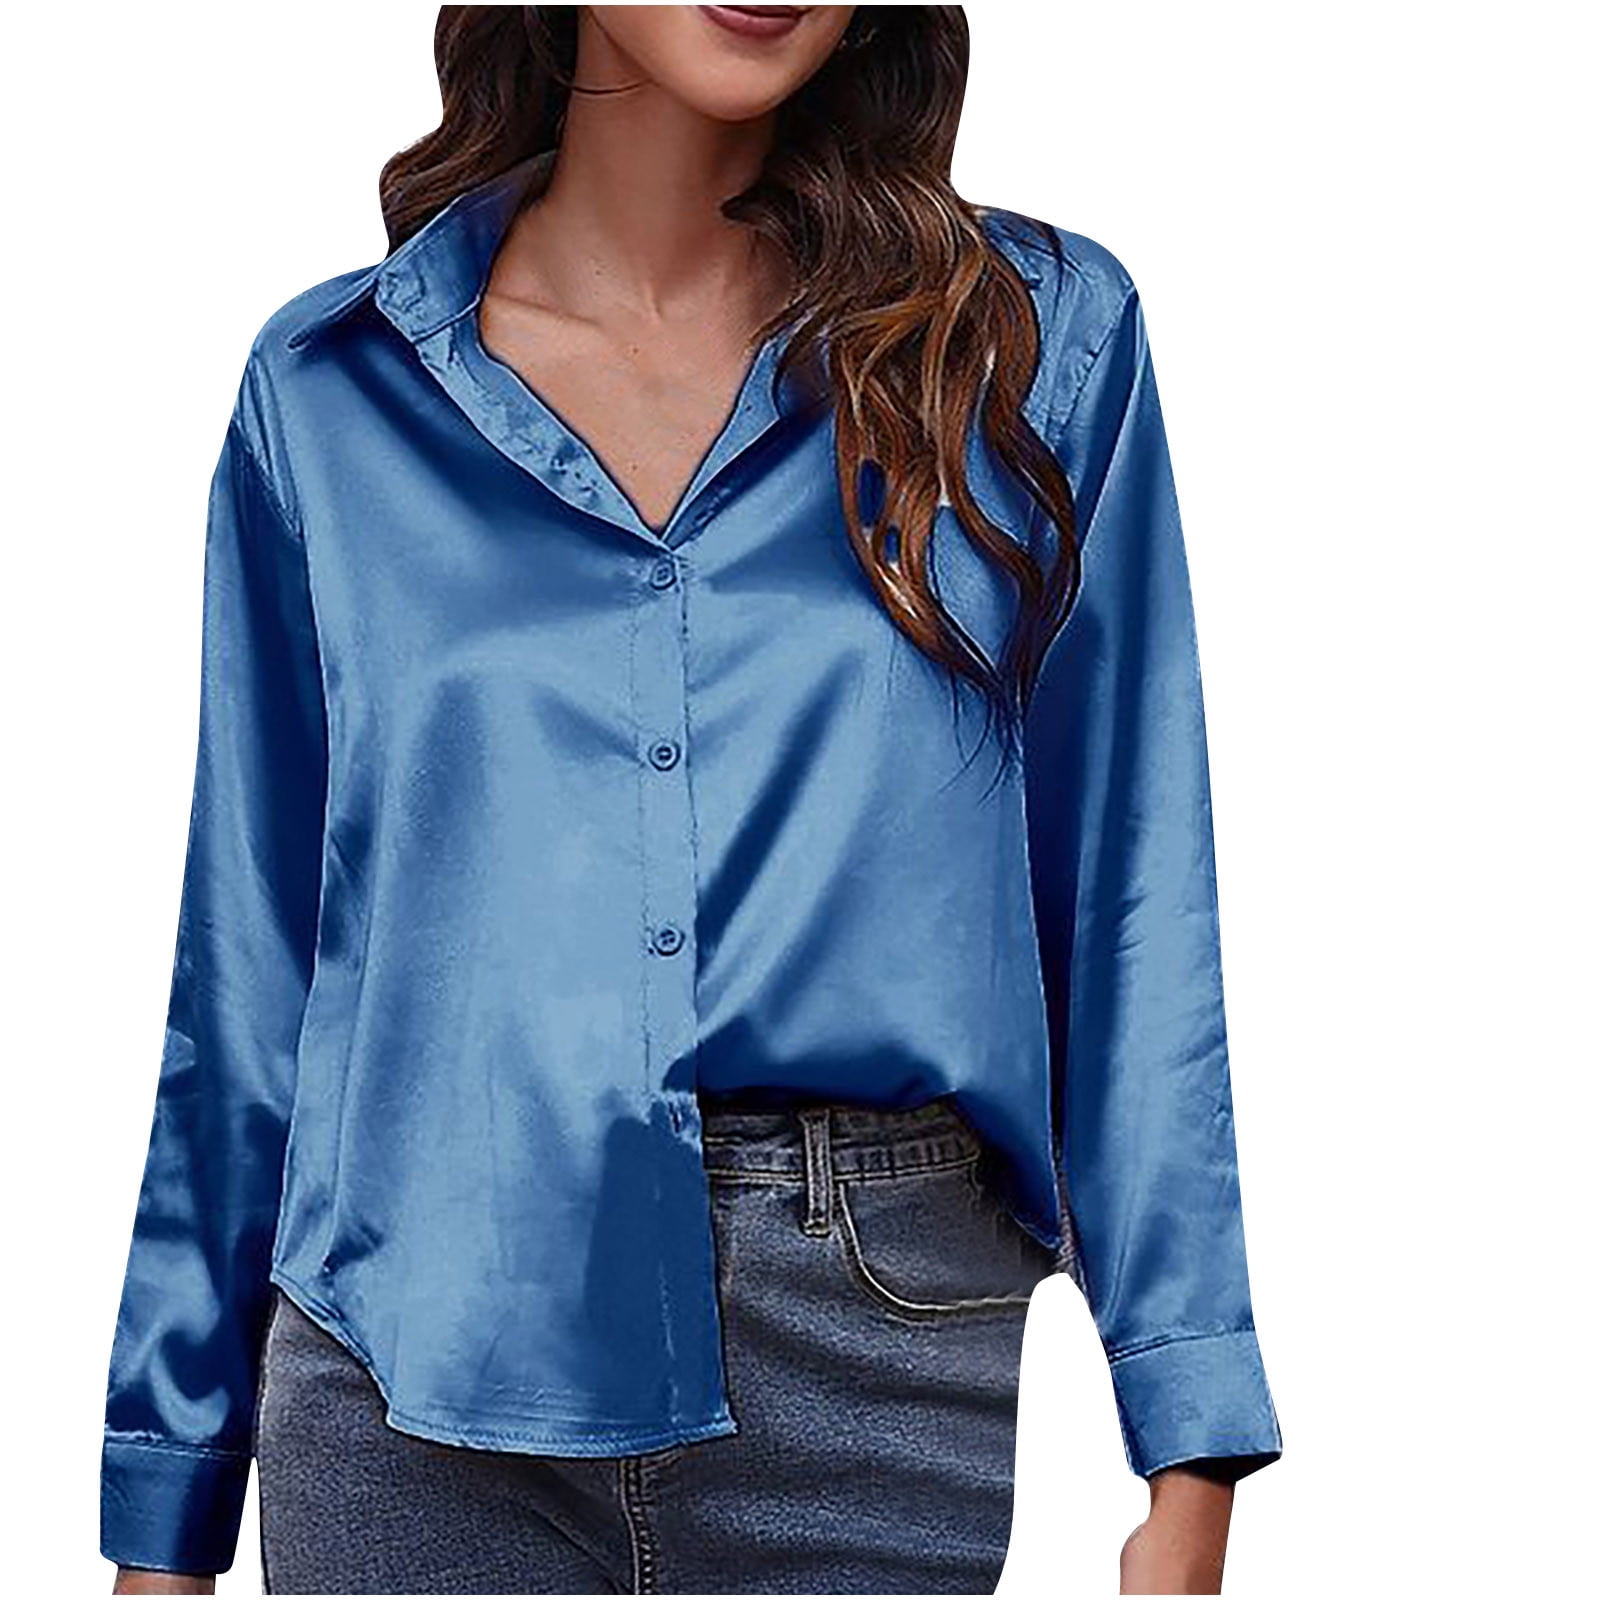 Miqieer Women's Silk Blouse Long Sleeve Lady Shirt Casual Office Work  Blouse Shirt Tops